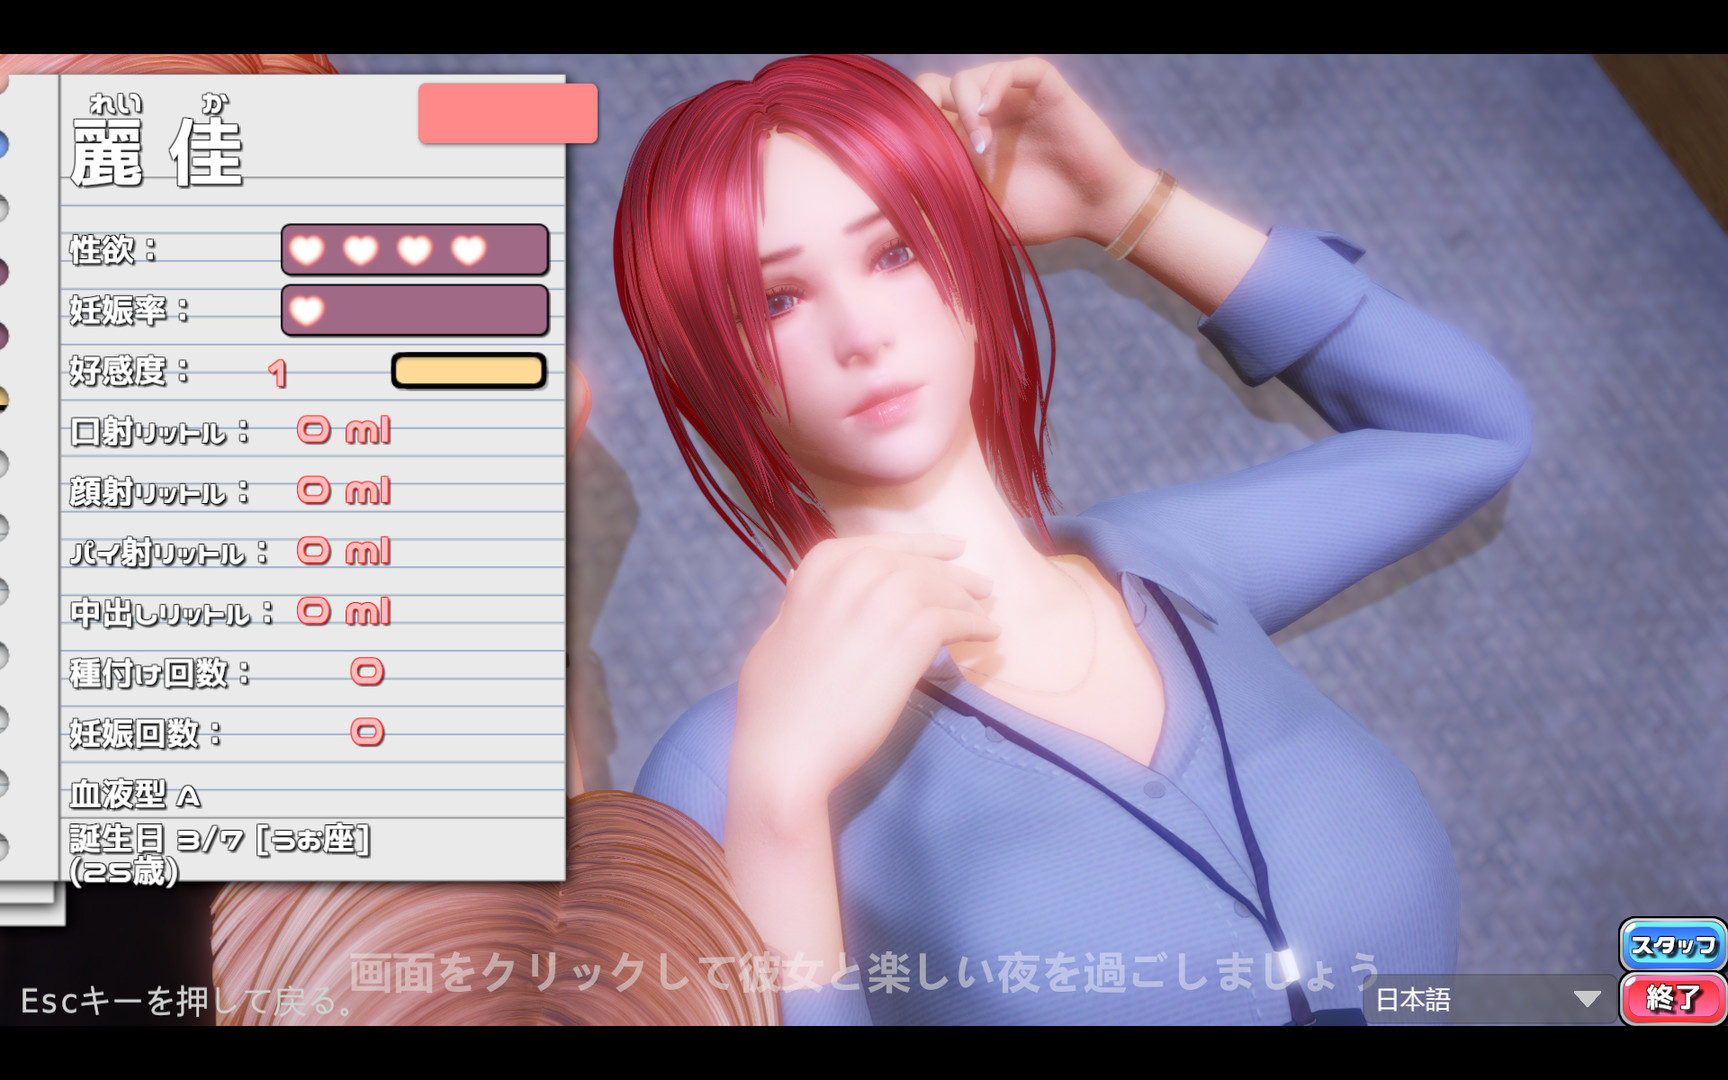 【SLG/中文/3D】完美恋人 v1.30HFX2 Steam锁区官方中文版【存档/2.3G】